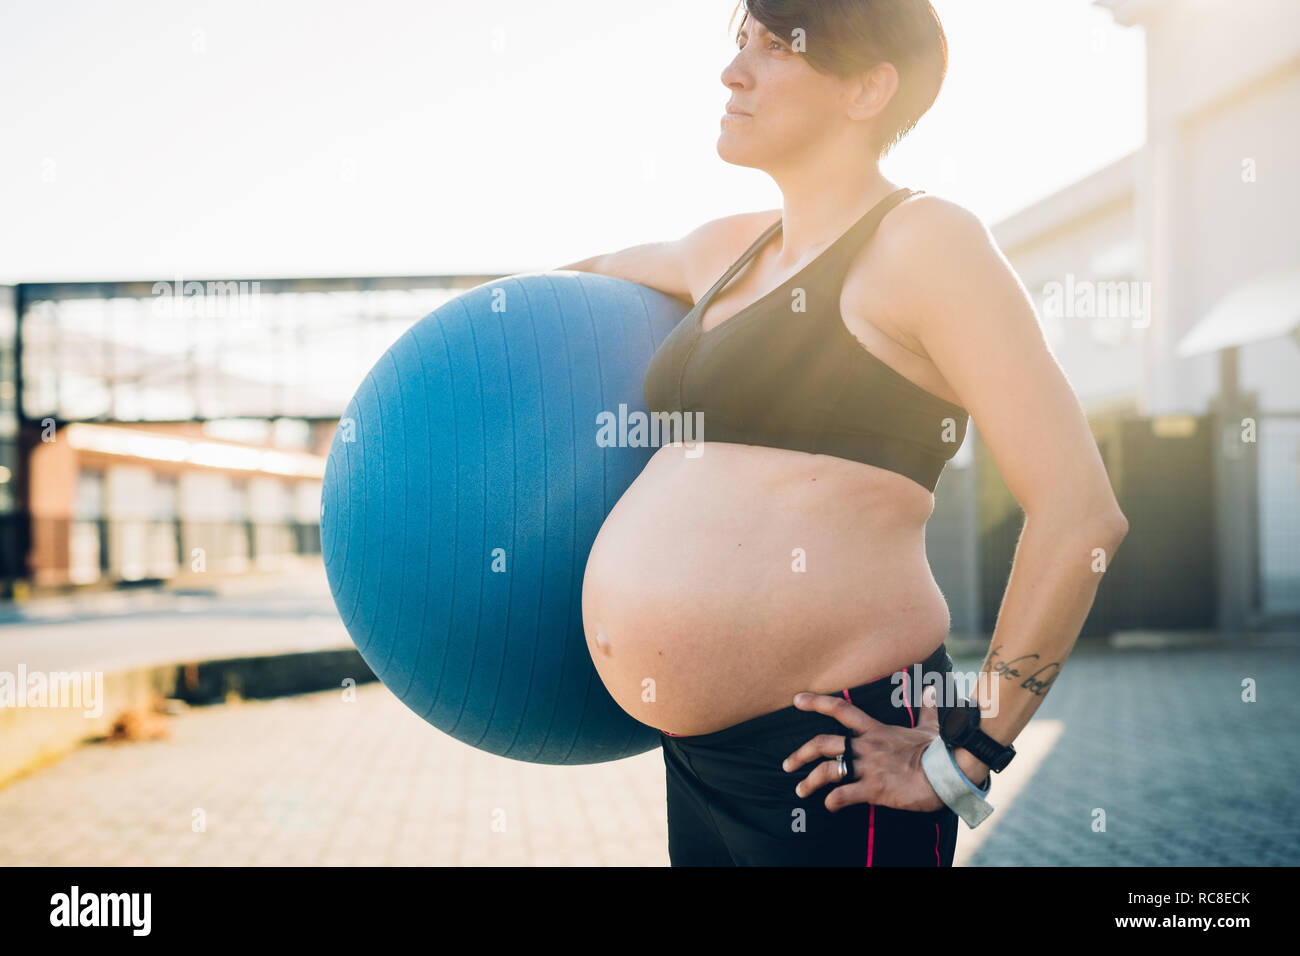 Pregnant woman holding exercise ball Stock Photo